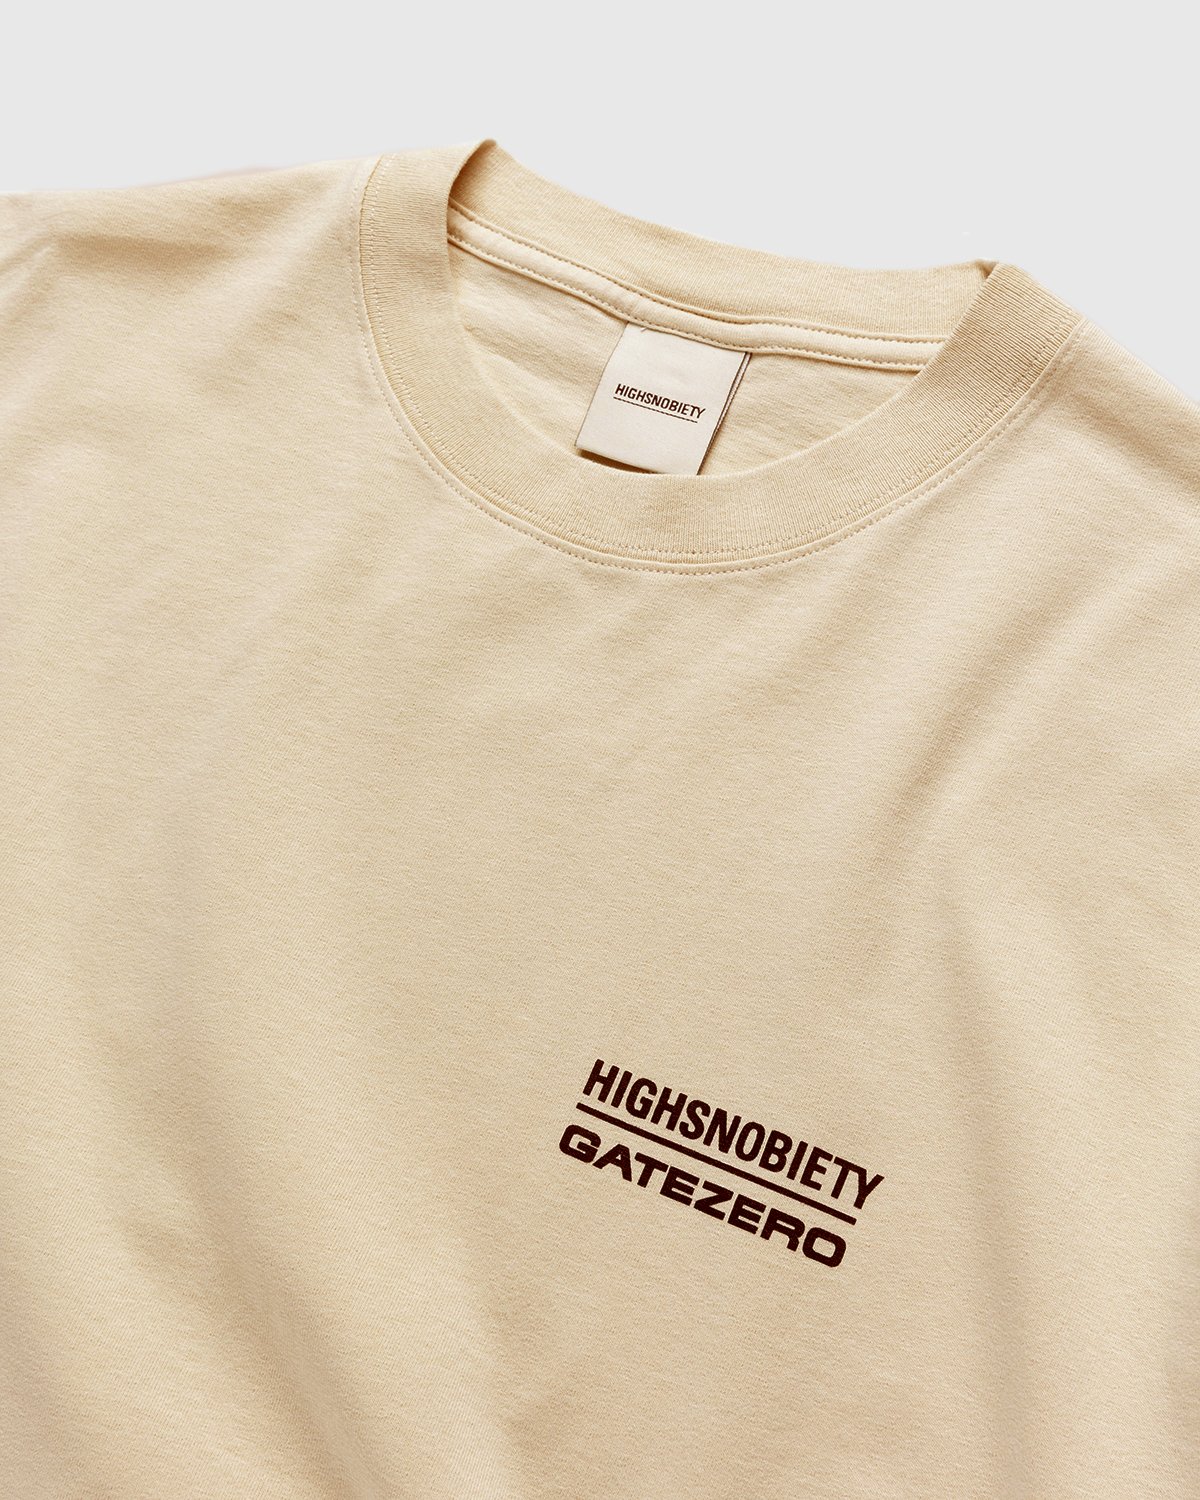 Highsnobiety - GATEZERO City Series 1 T-Shirt Eggshell - Clothing - White - Image 4